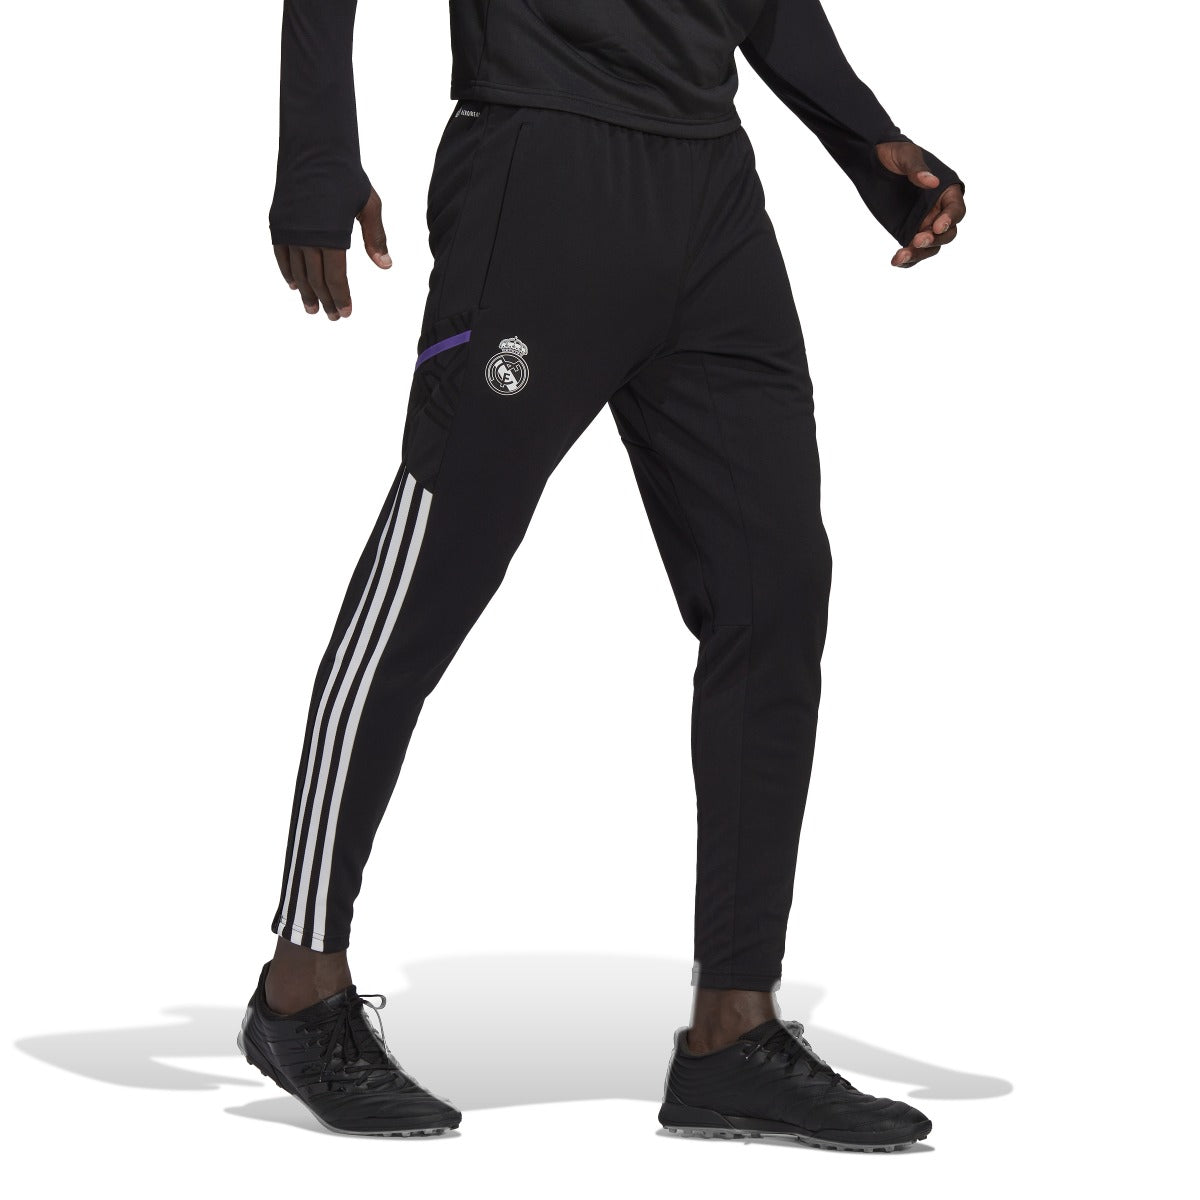 Real Madrid Condivo 2022/2023 training pants - Black/White/Purple